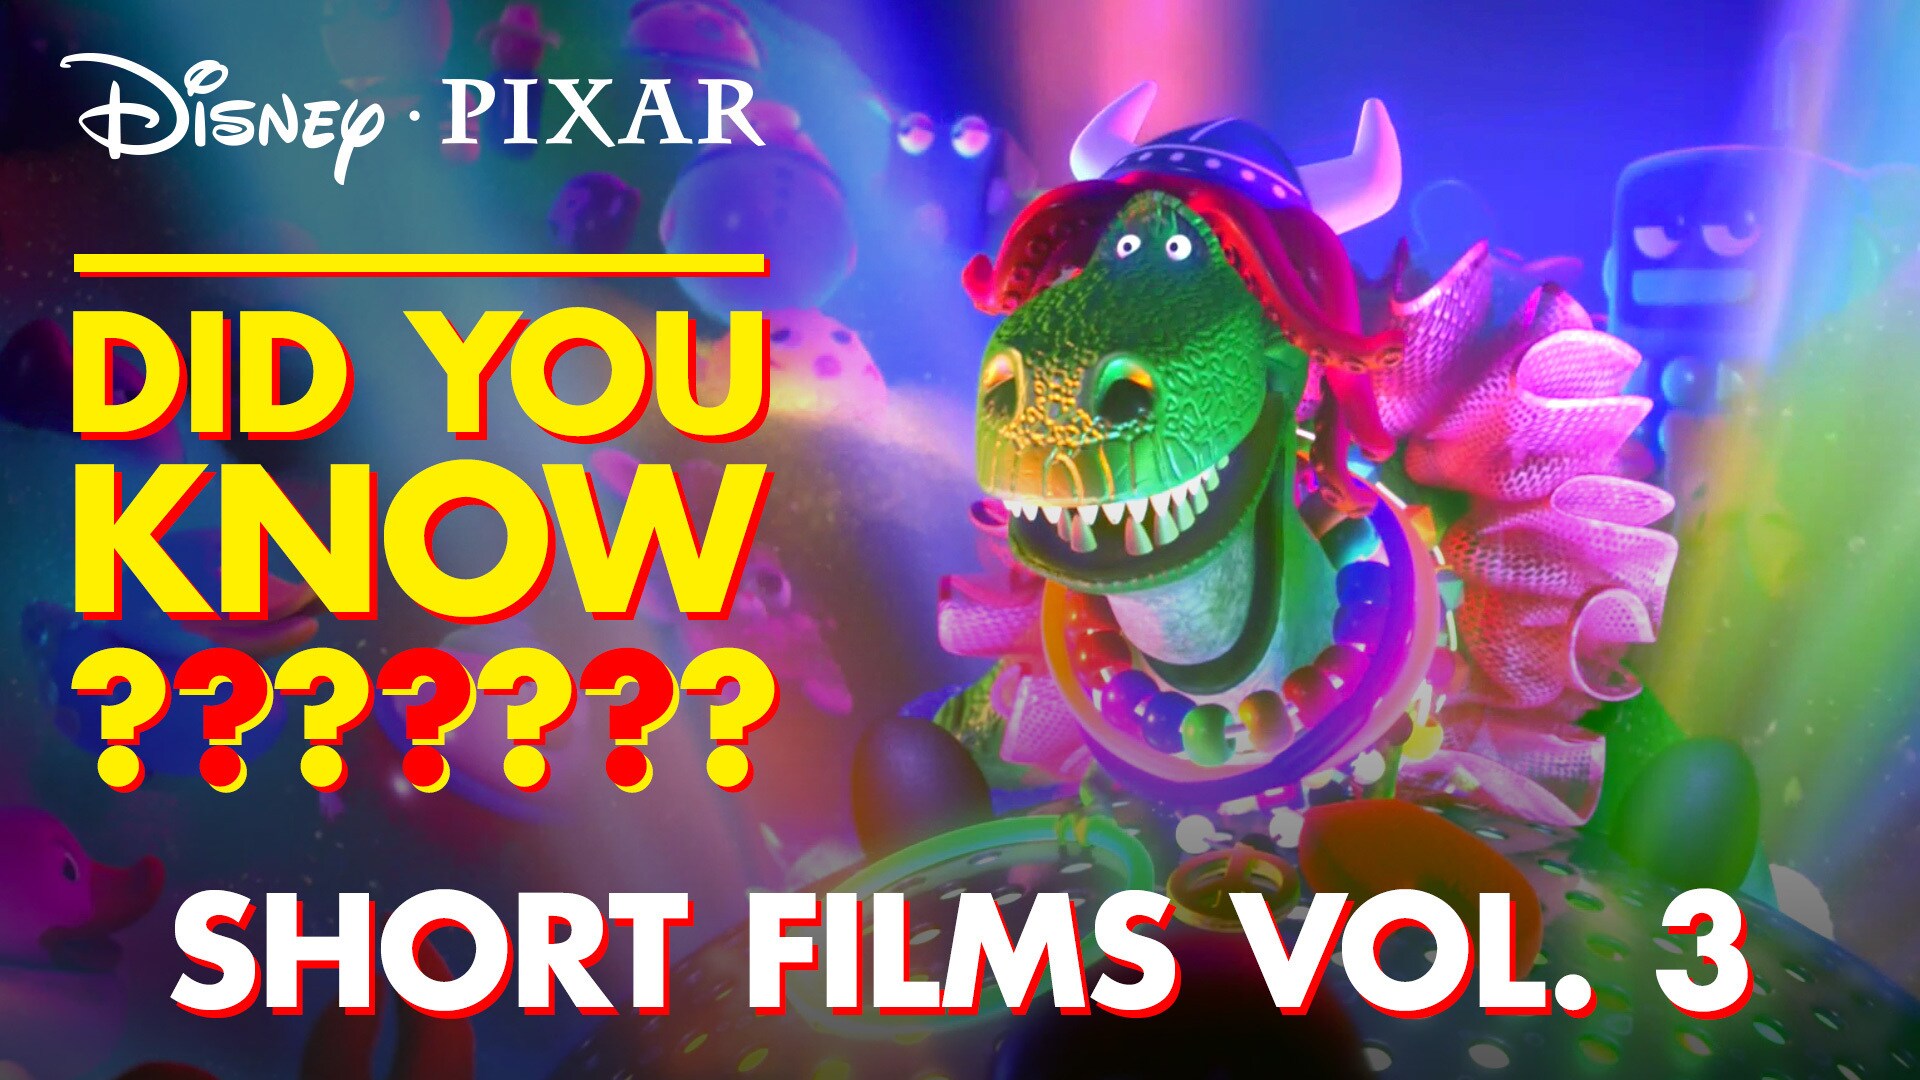 Pixar Short Films Collection Vol. 3 | Pixar Did You Know by Disney•Pixar